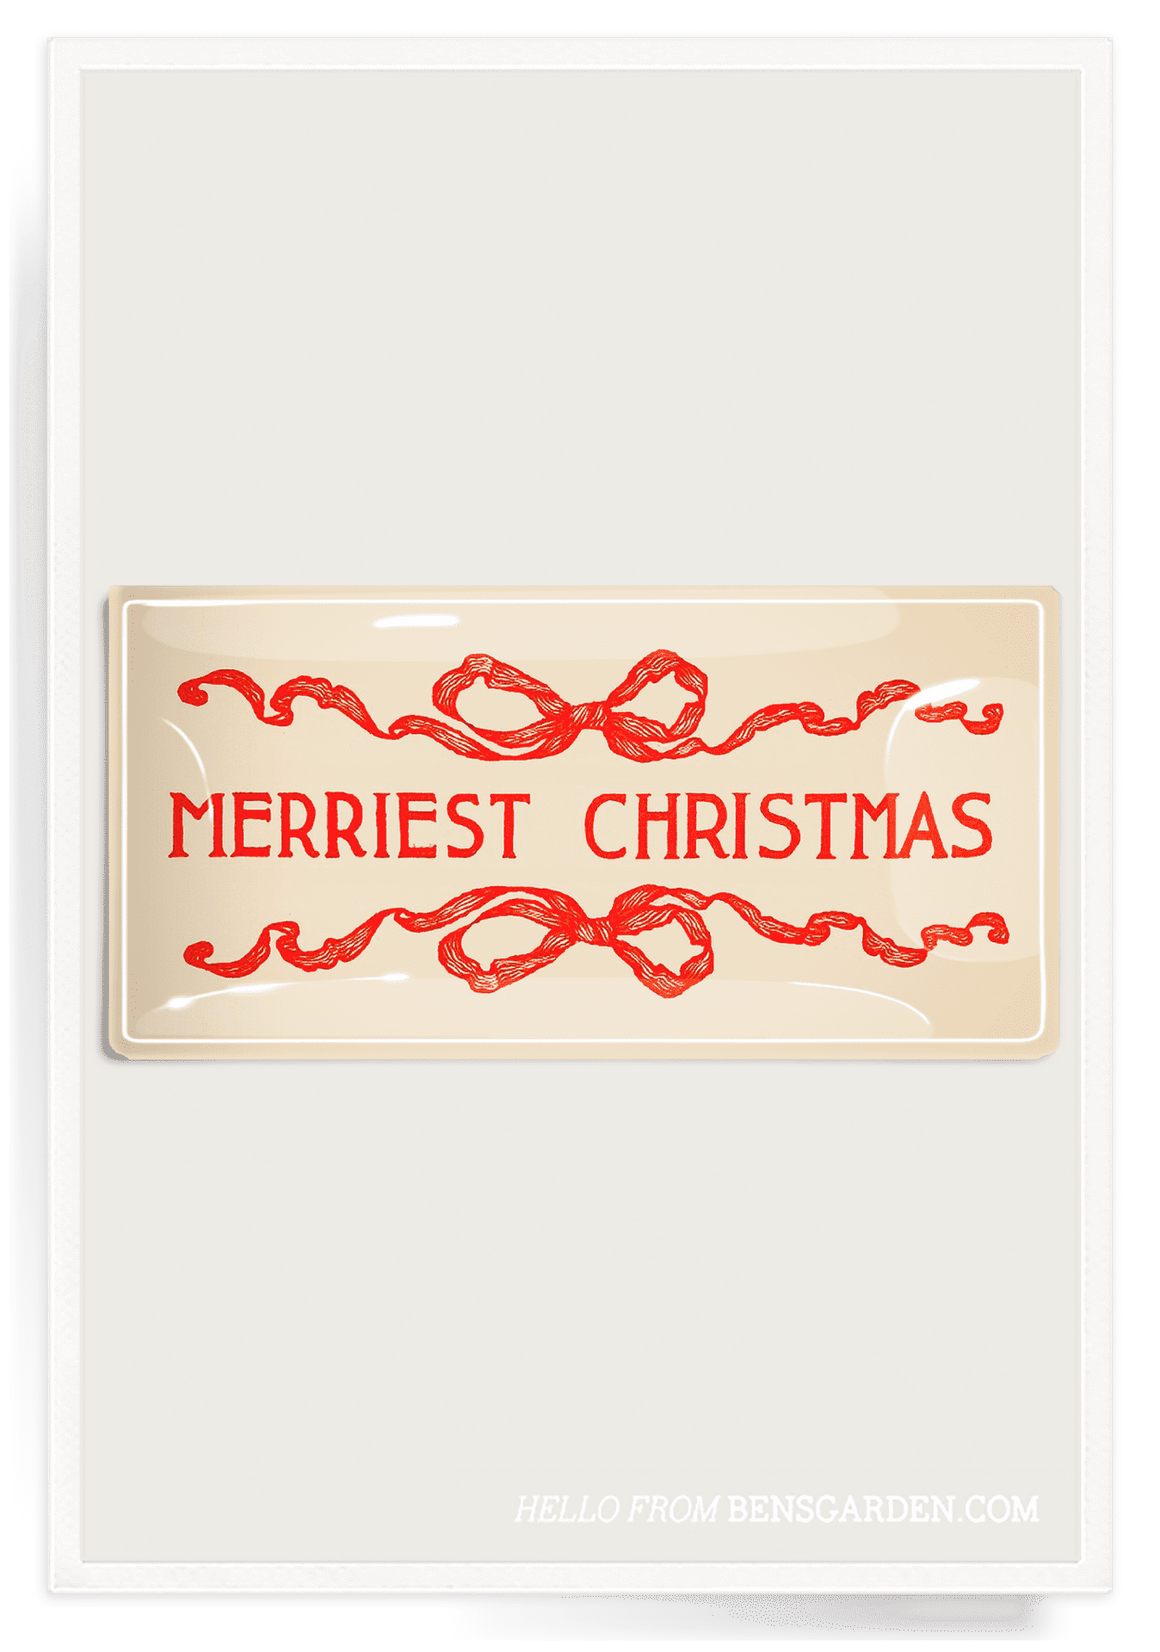 Bensgarden.com | Merriest Christmas Text Decoupage Glass Tray - Ben's Garden. Made in New York City.